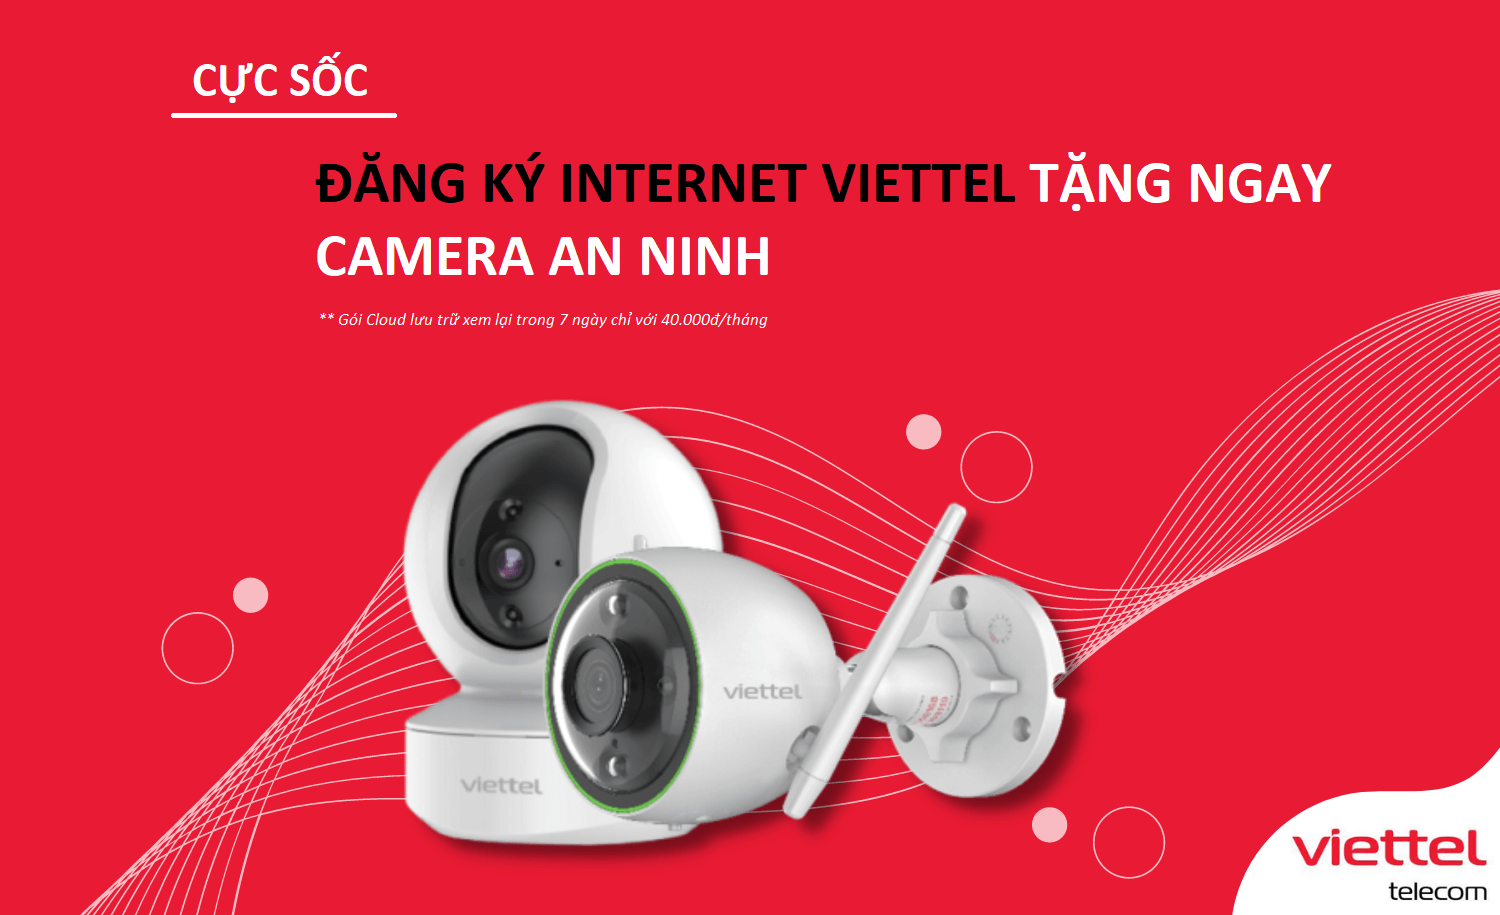 Lap internet Viettel tang camera